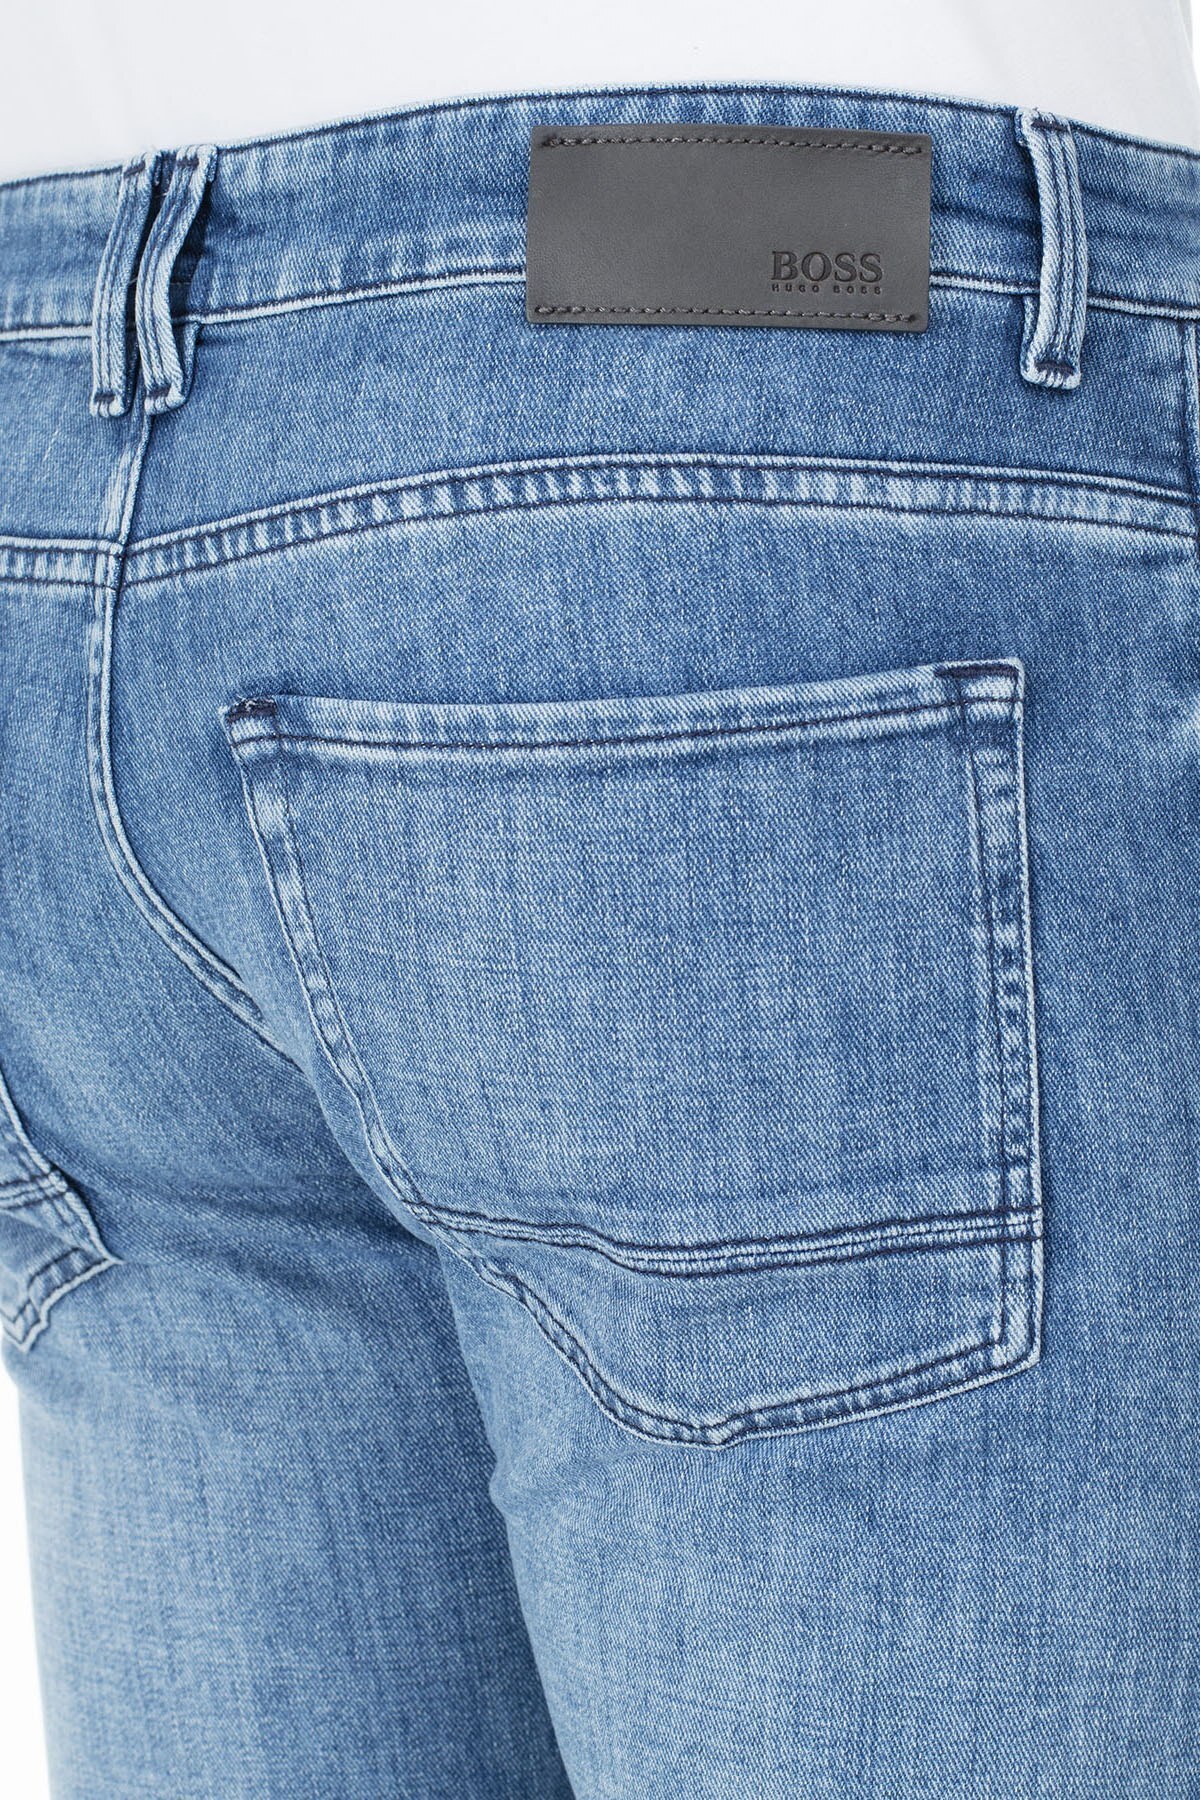 Hugo Boss Slim Fit Jeans Erkek Kot Pantolon 50426456 440 MAVİ